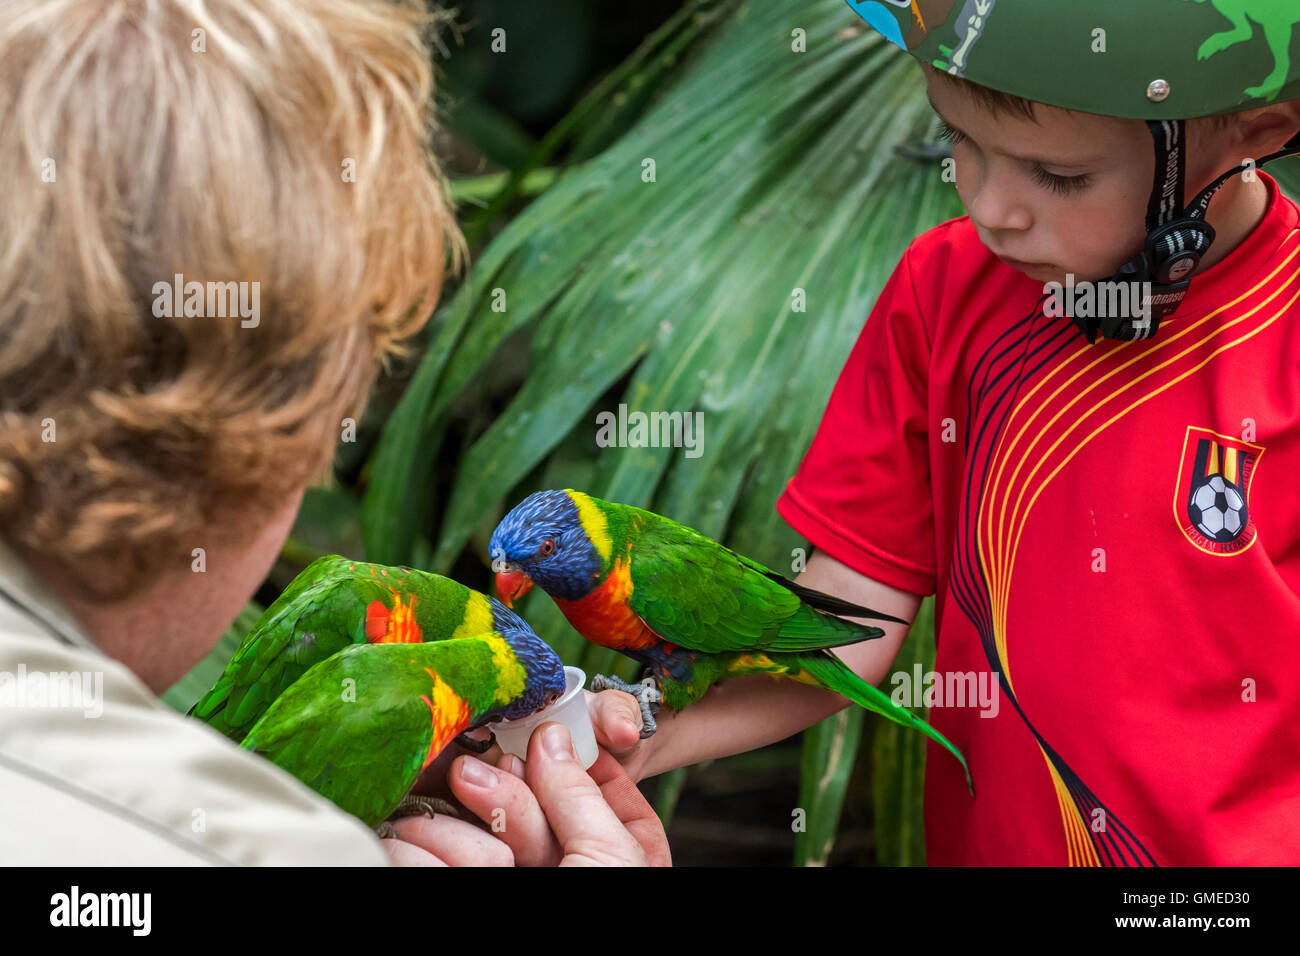 Child feeding tame rainbow lorikeets / Swainson's Lorikeet - colourful parrots native to Australia - by hand in zoo Stock Photo